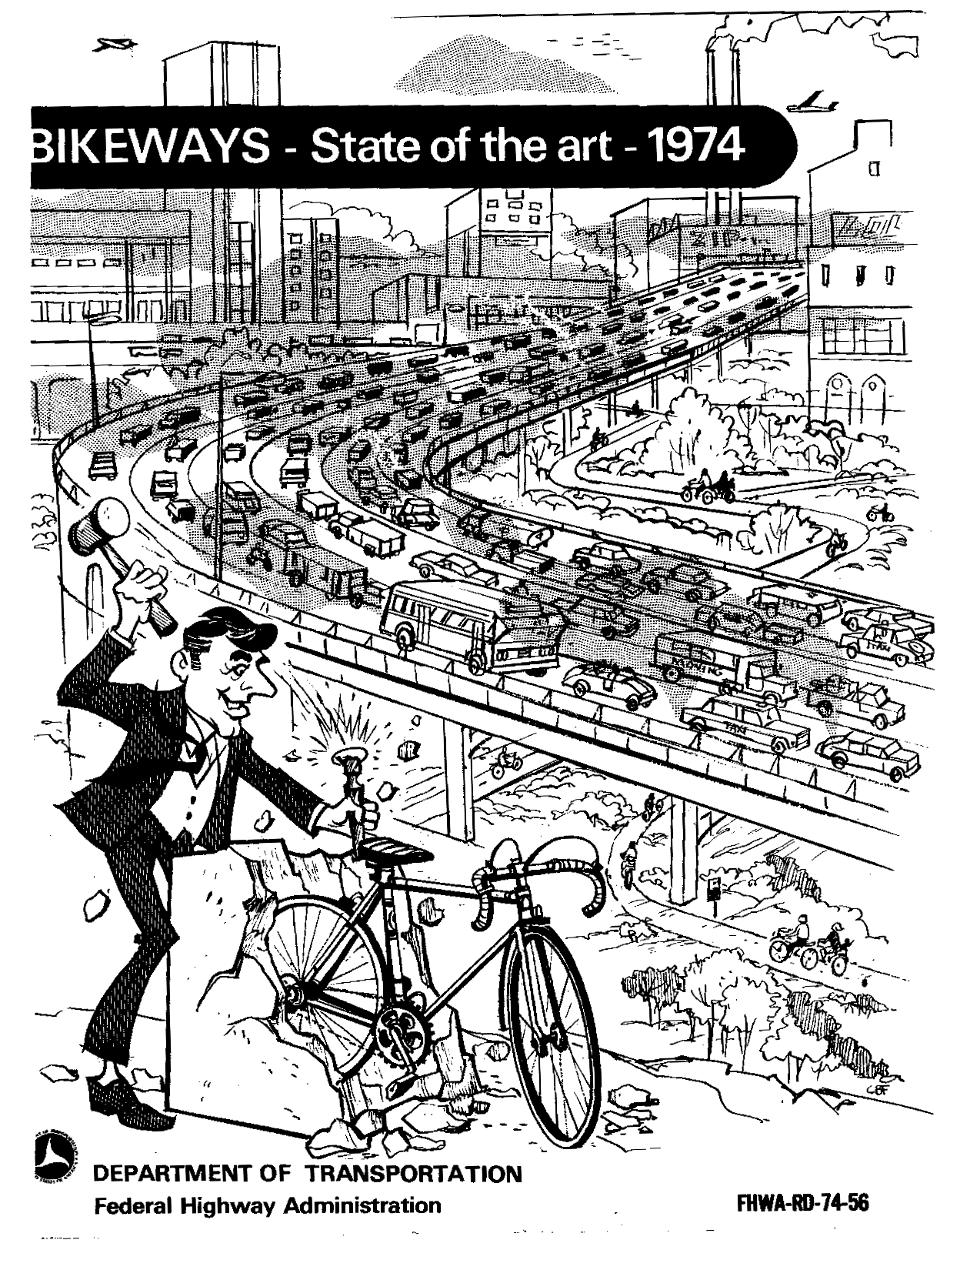 Bikeways—State of the Art, 1974